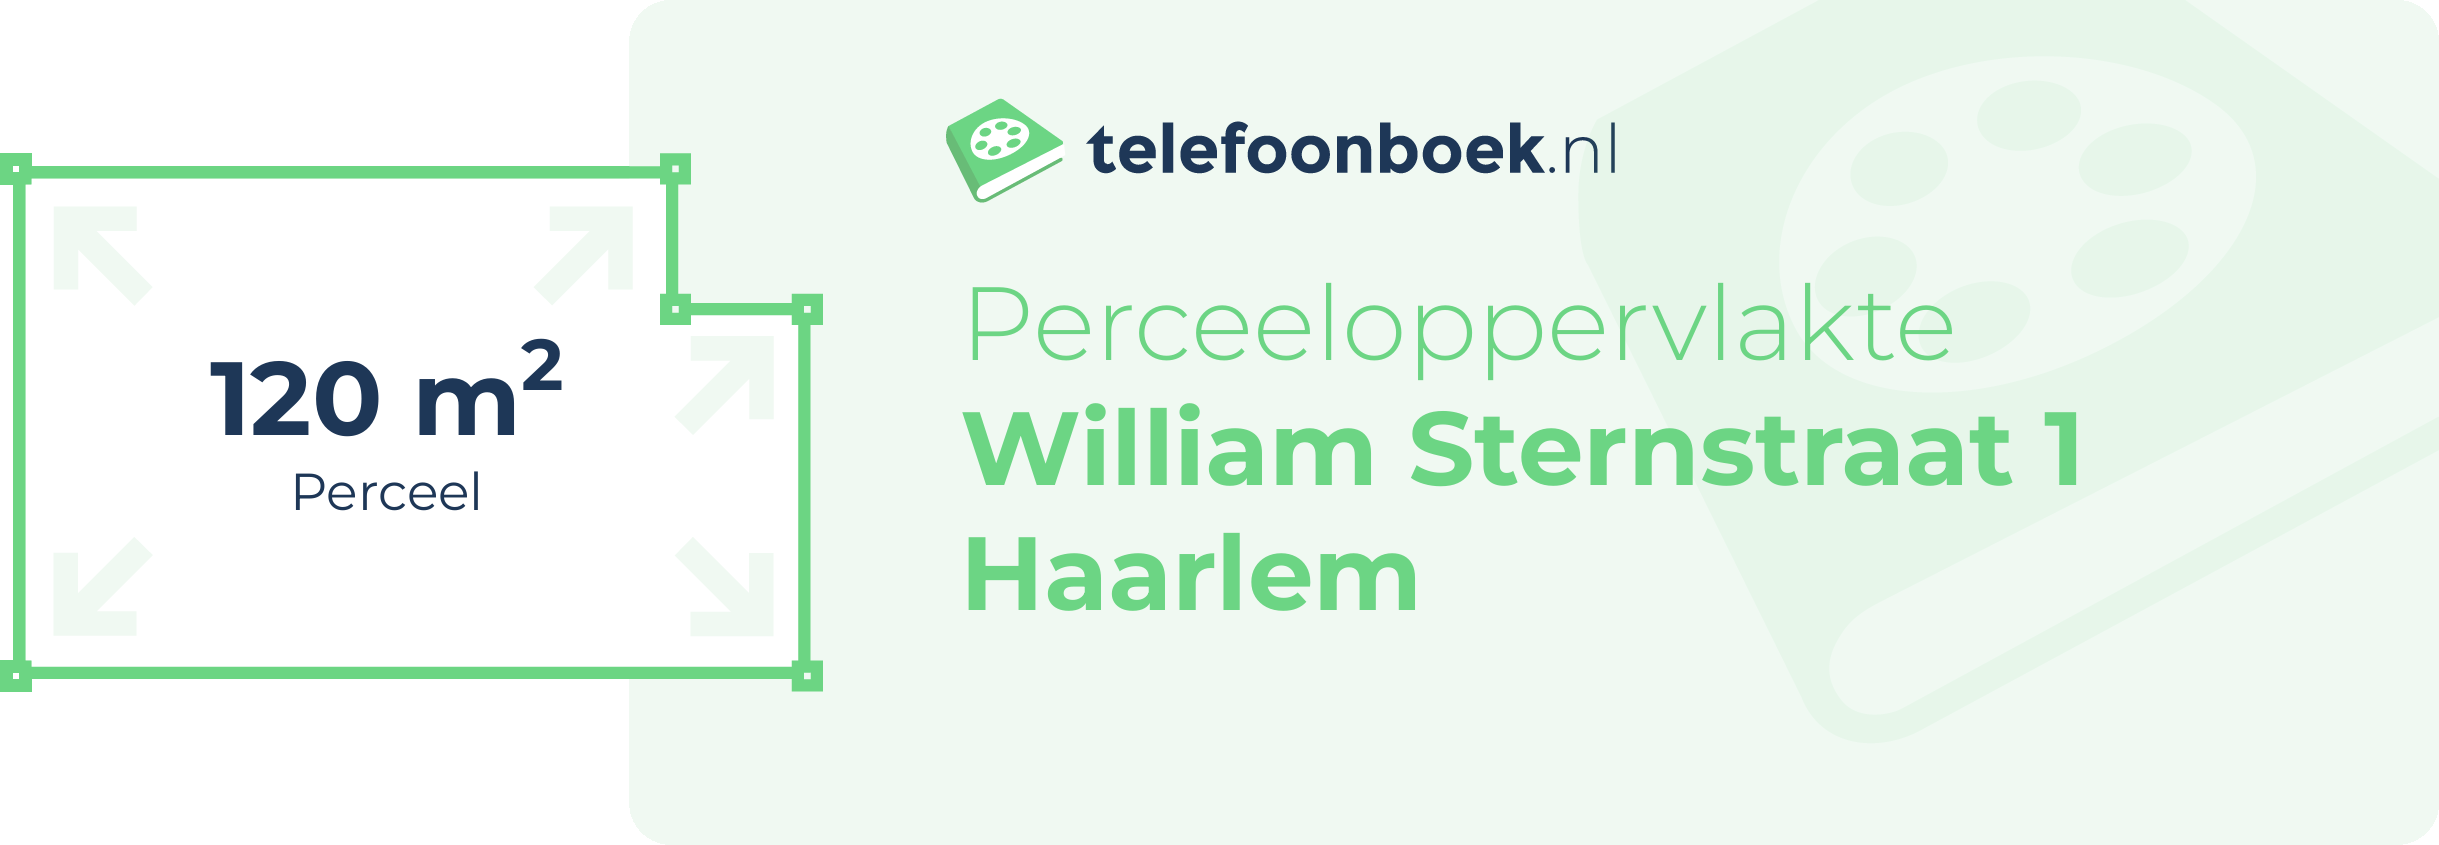 Perceeloppervlakte William Sternstraat 1 Haarlem